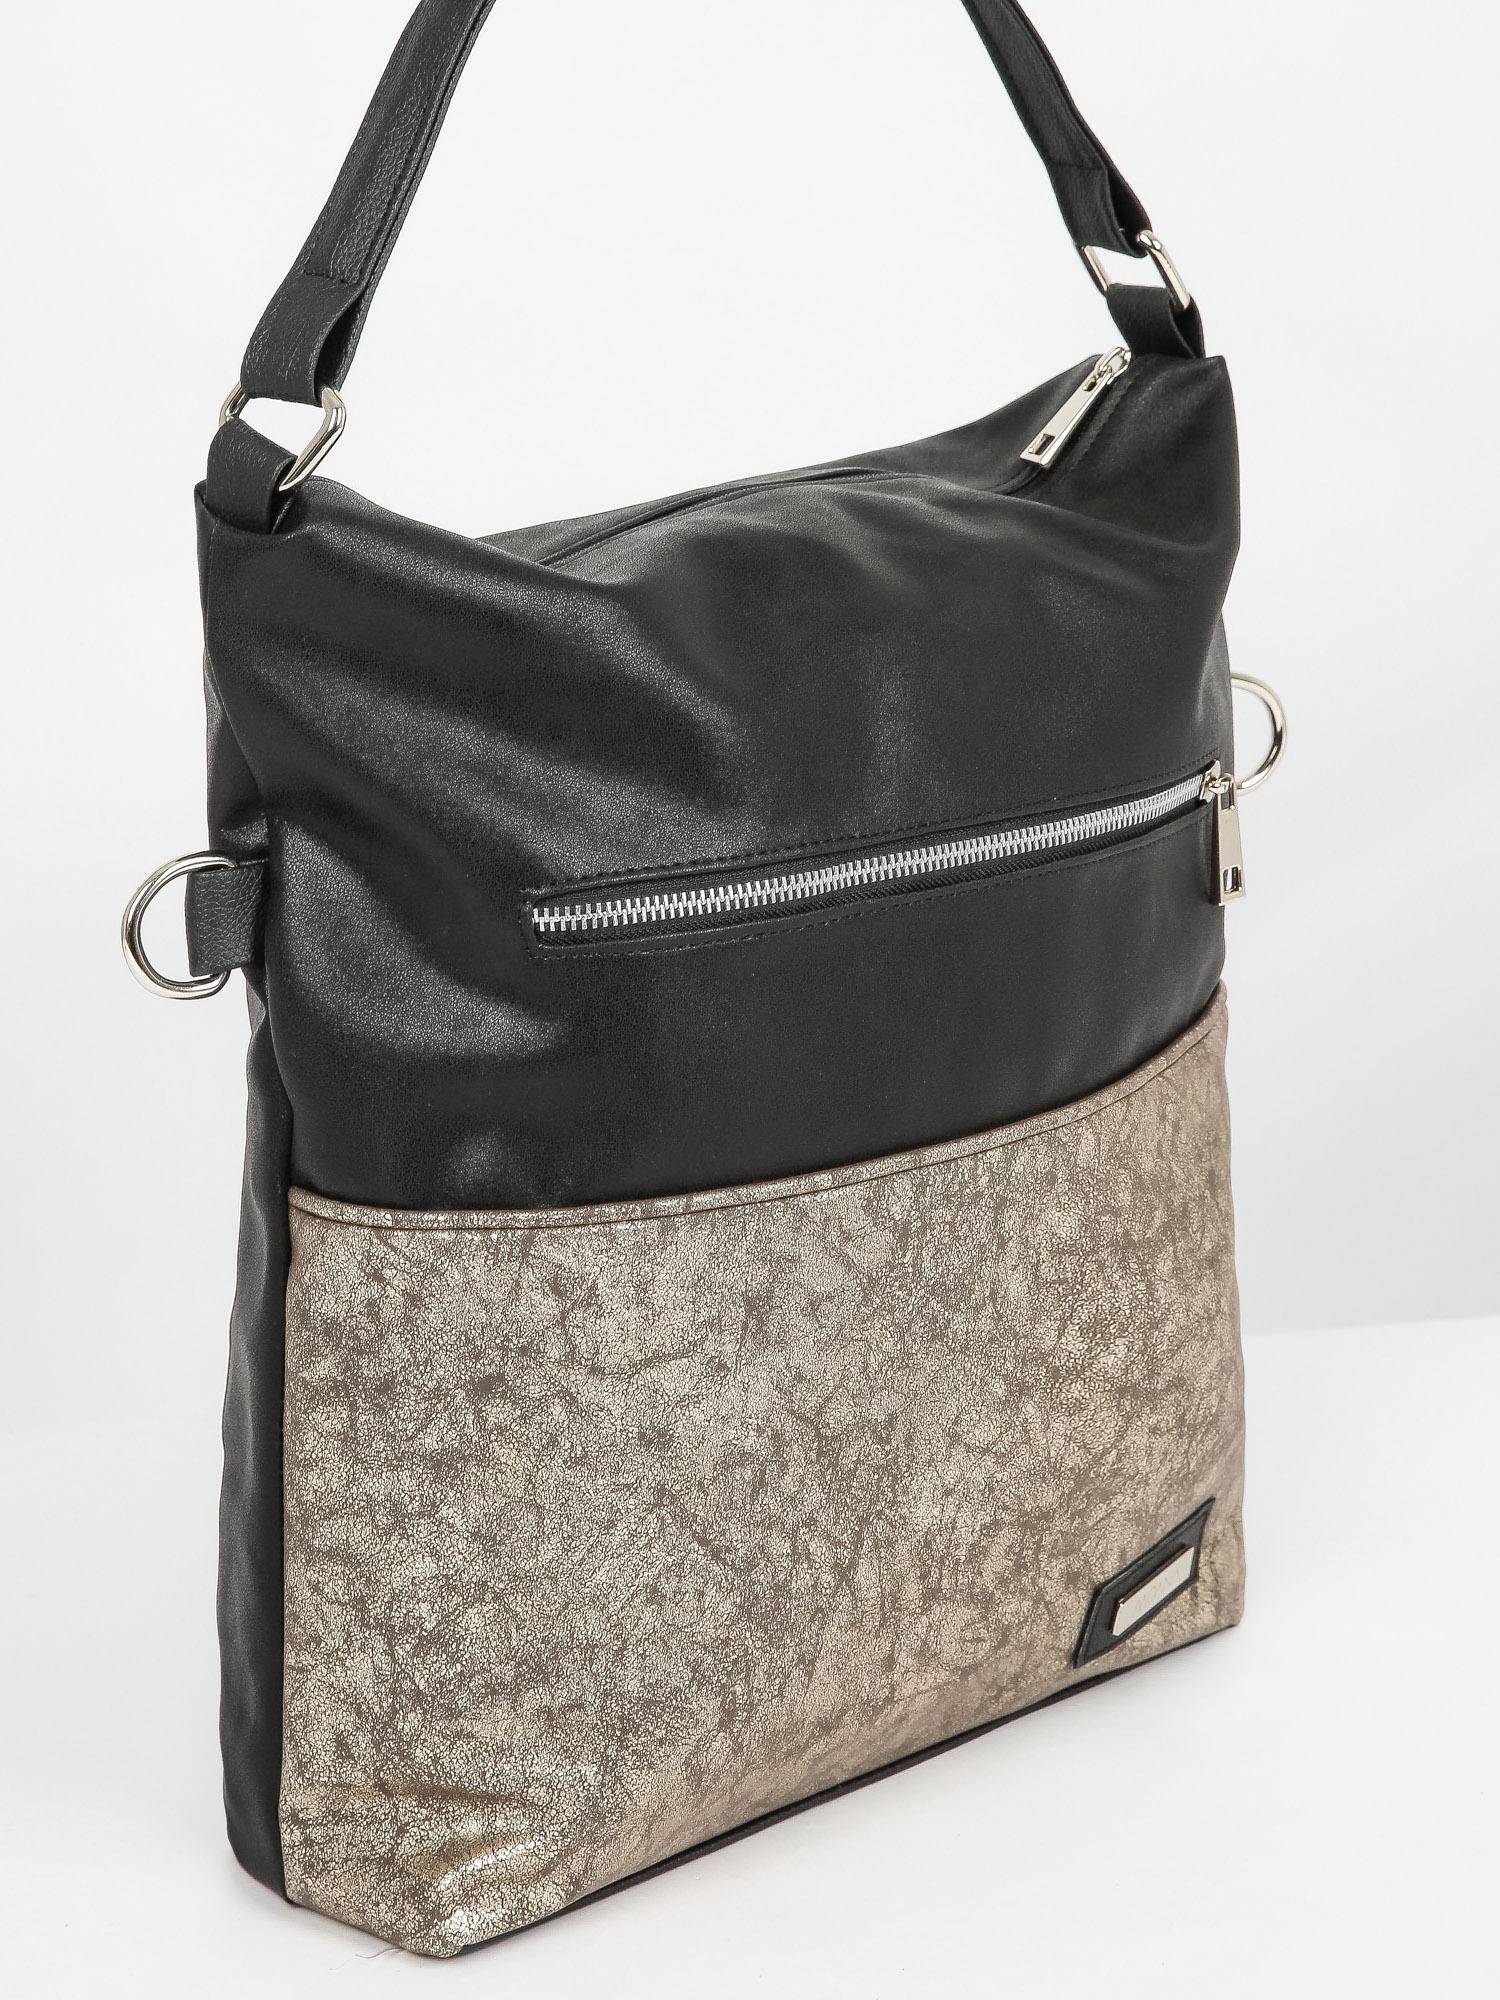 Borse bag made of natural leather imitation black